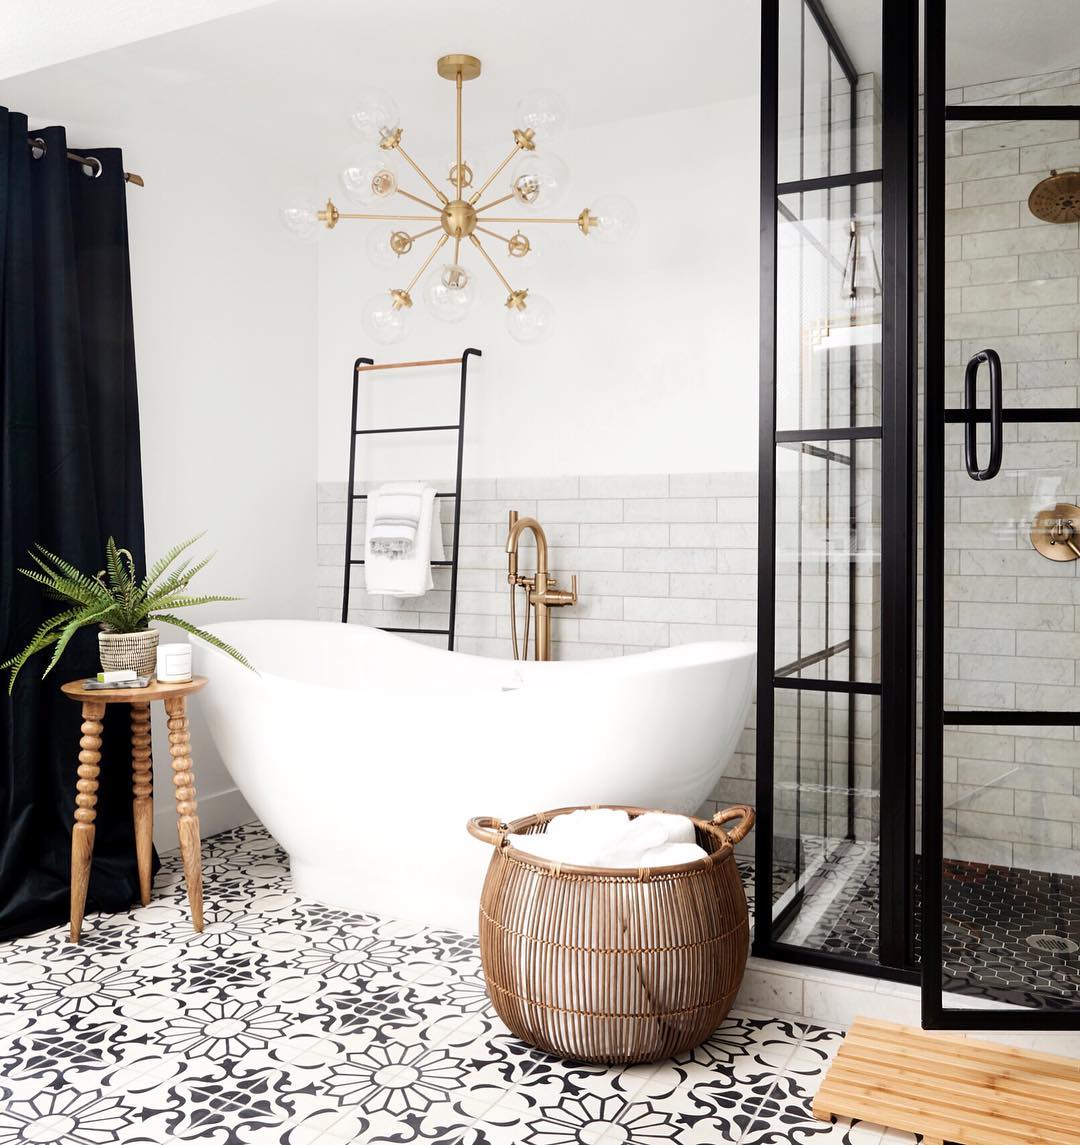 soaking tub in bathroom with chandelier and new tile flooring photo by Instagram user @nicolegerulat